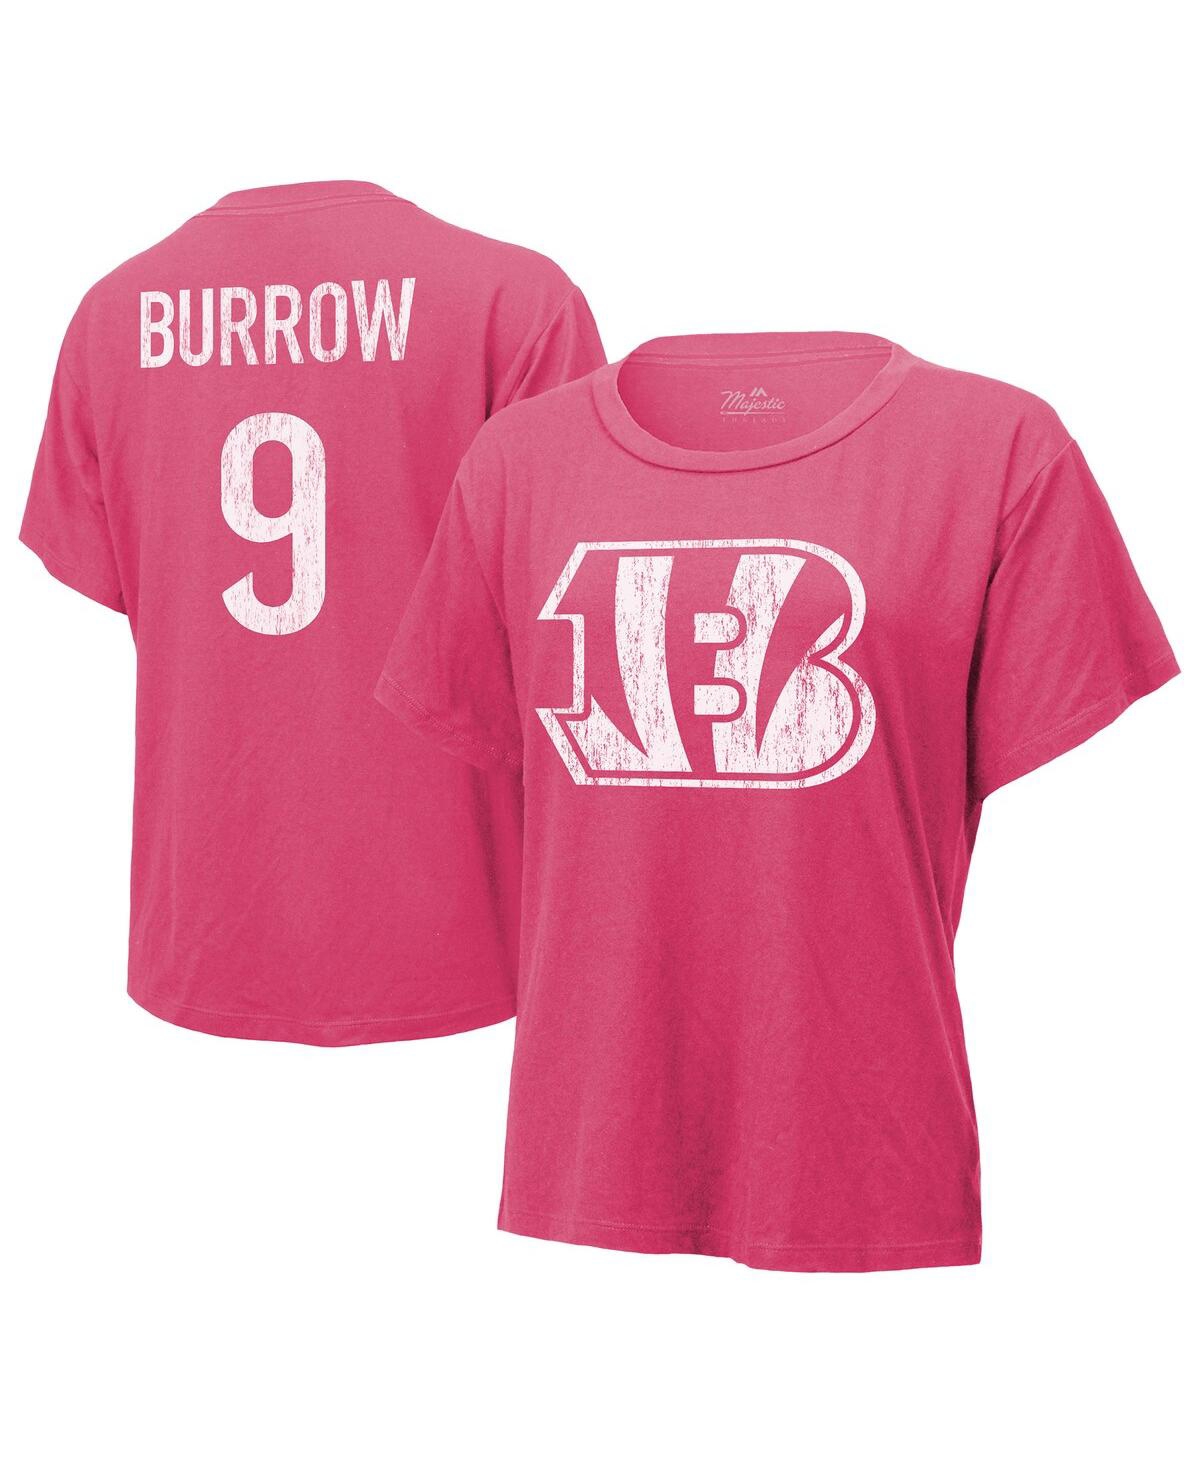 Women's Majestic Threads Joe Burrow Pink Distressed Cincinnati Bengals Name and Number T-shirt - Pink